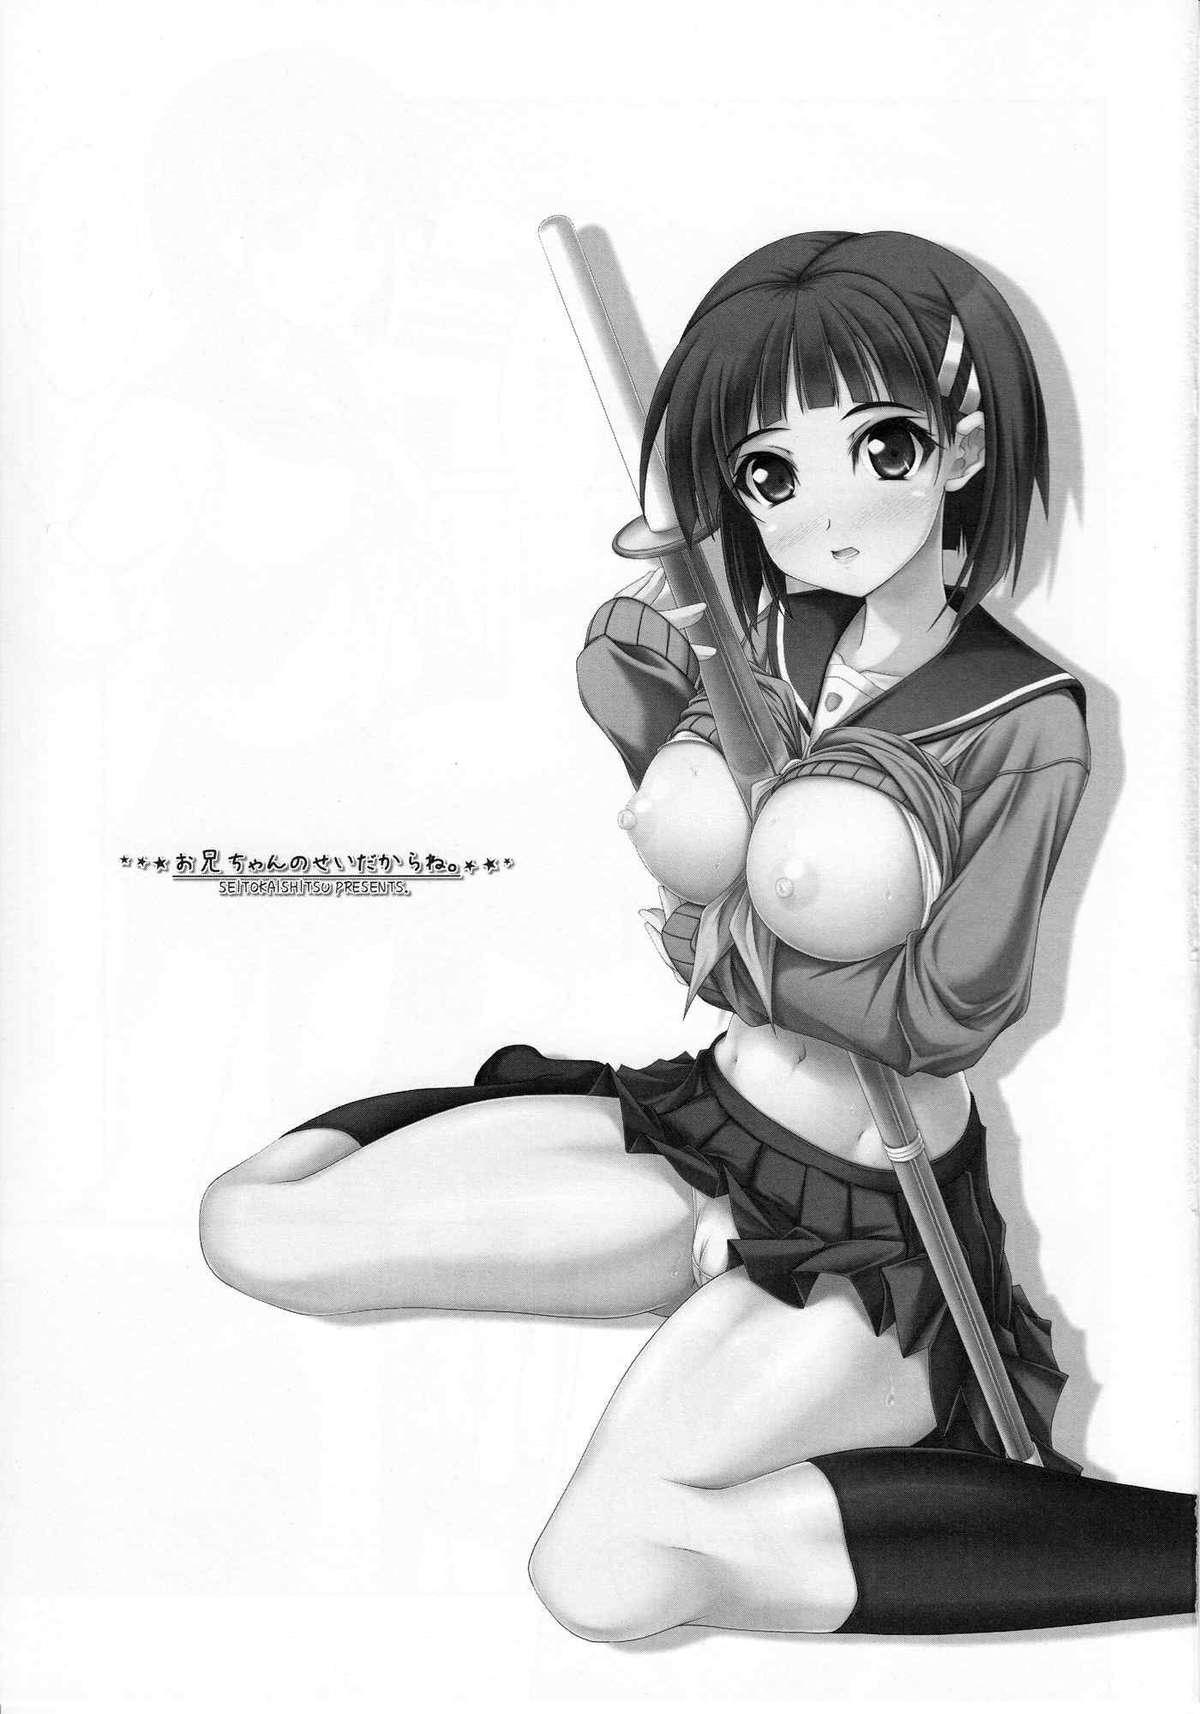 Atm Oniichan no Sei Dakara ne - Sword art online Bitch - Page 2